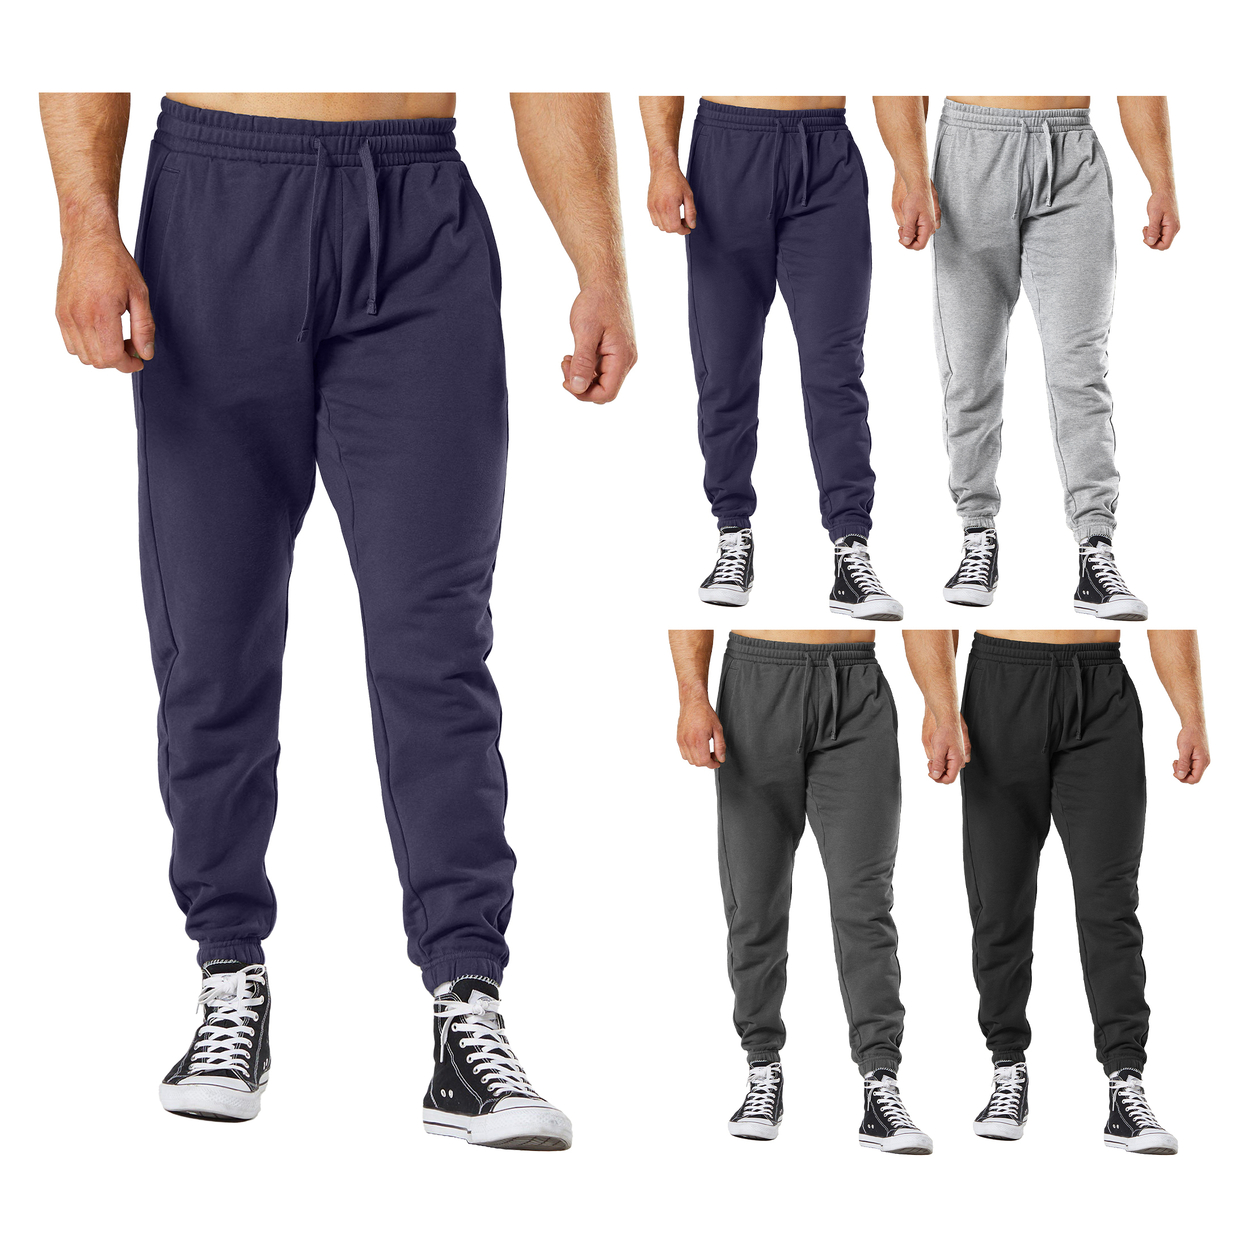 Men's Ultra-Soft Cozy Winter Warm Casual Fleece Lined Sweatpants Jogger - Navy, Xx-large